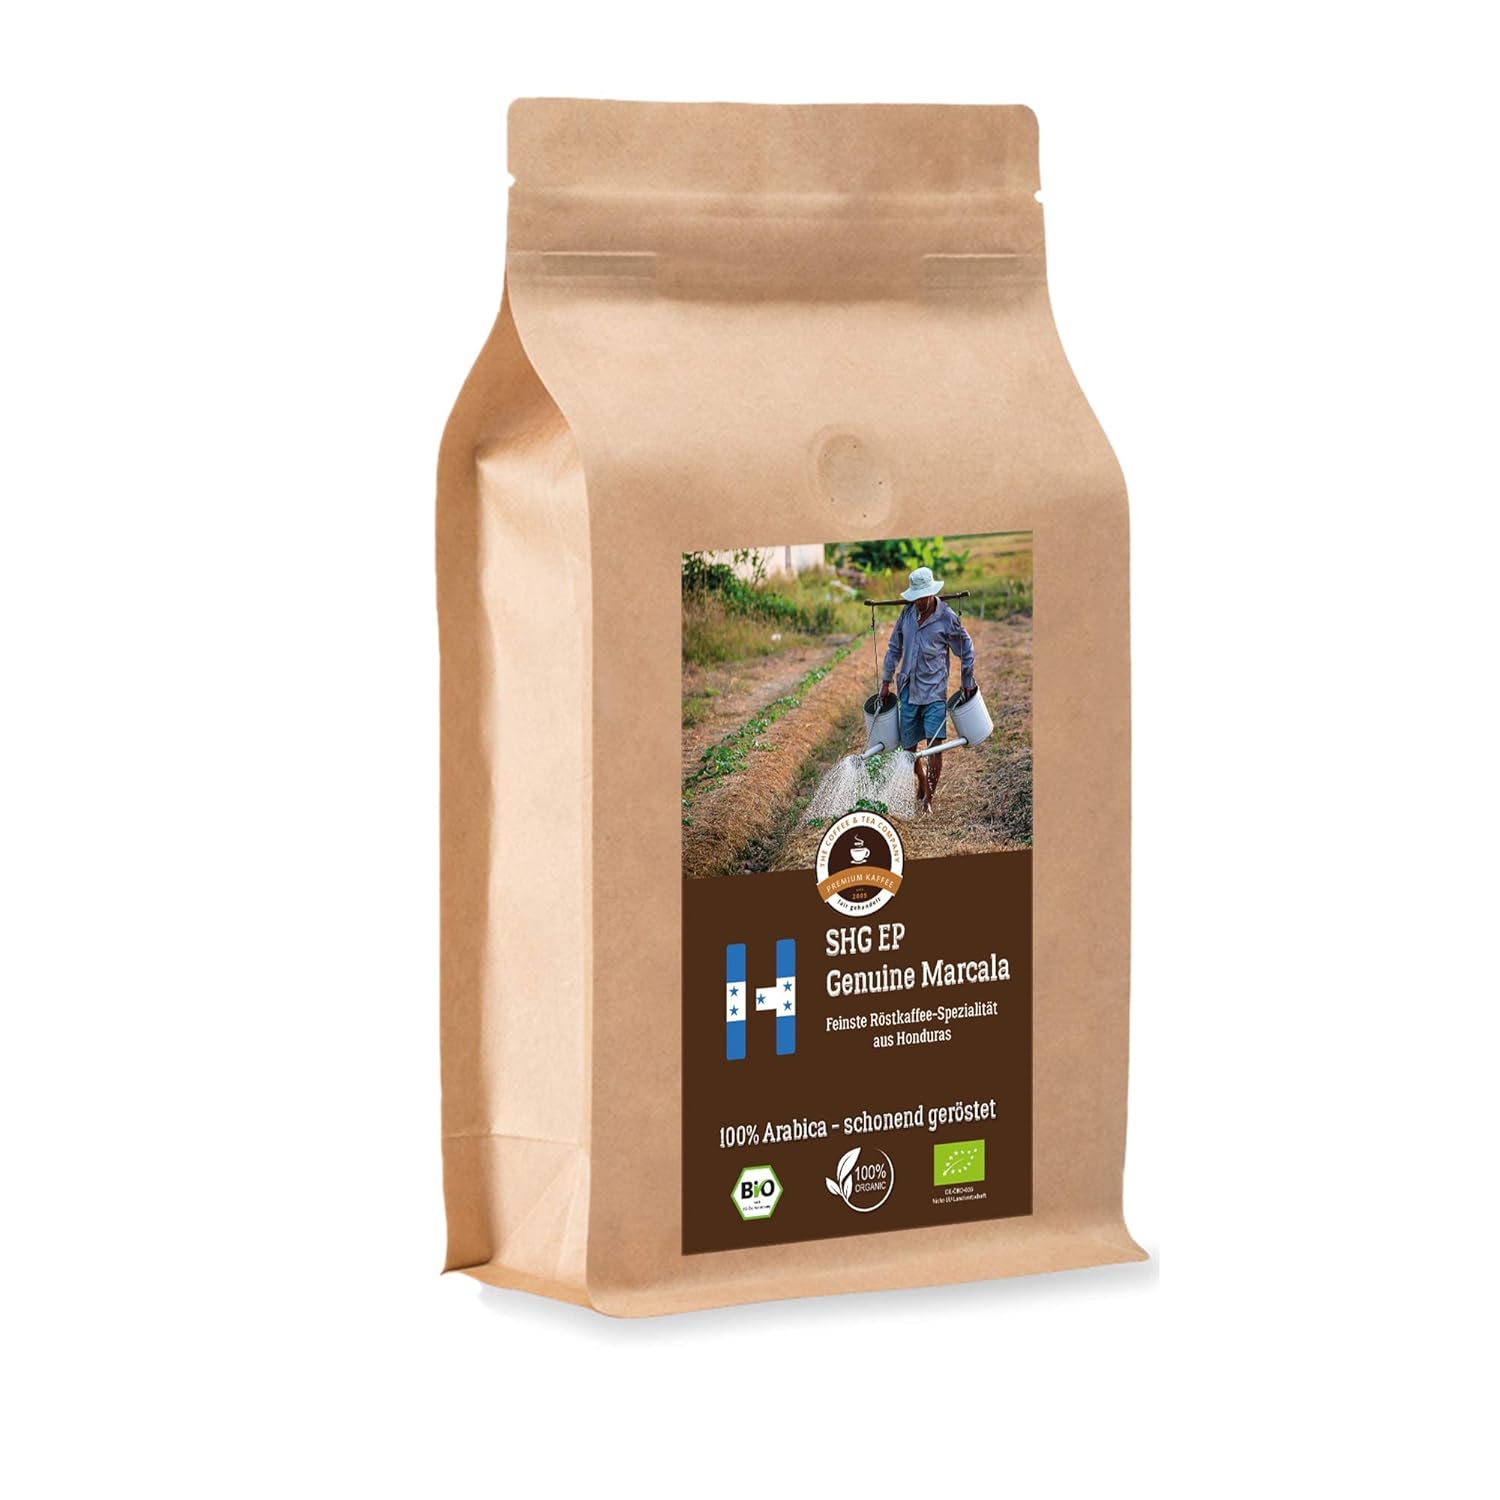 Coffee Globetrotter - Organic Honduras Genuine Marcala - 500 g Very Fine Ground - for Portafilter Machine, Sieve Machine - Top Coffee - Roasted Coffee from Organic Cultivation